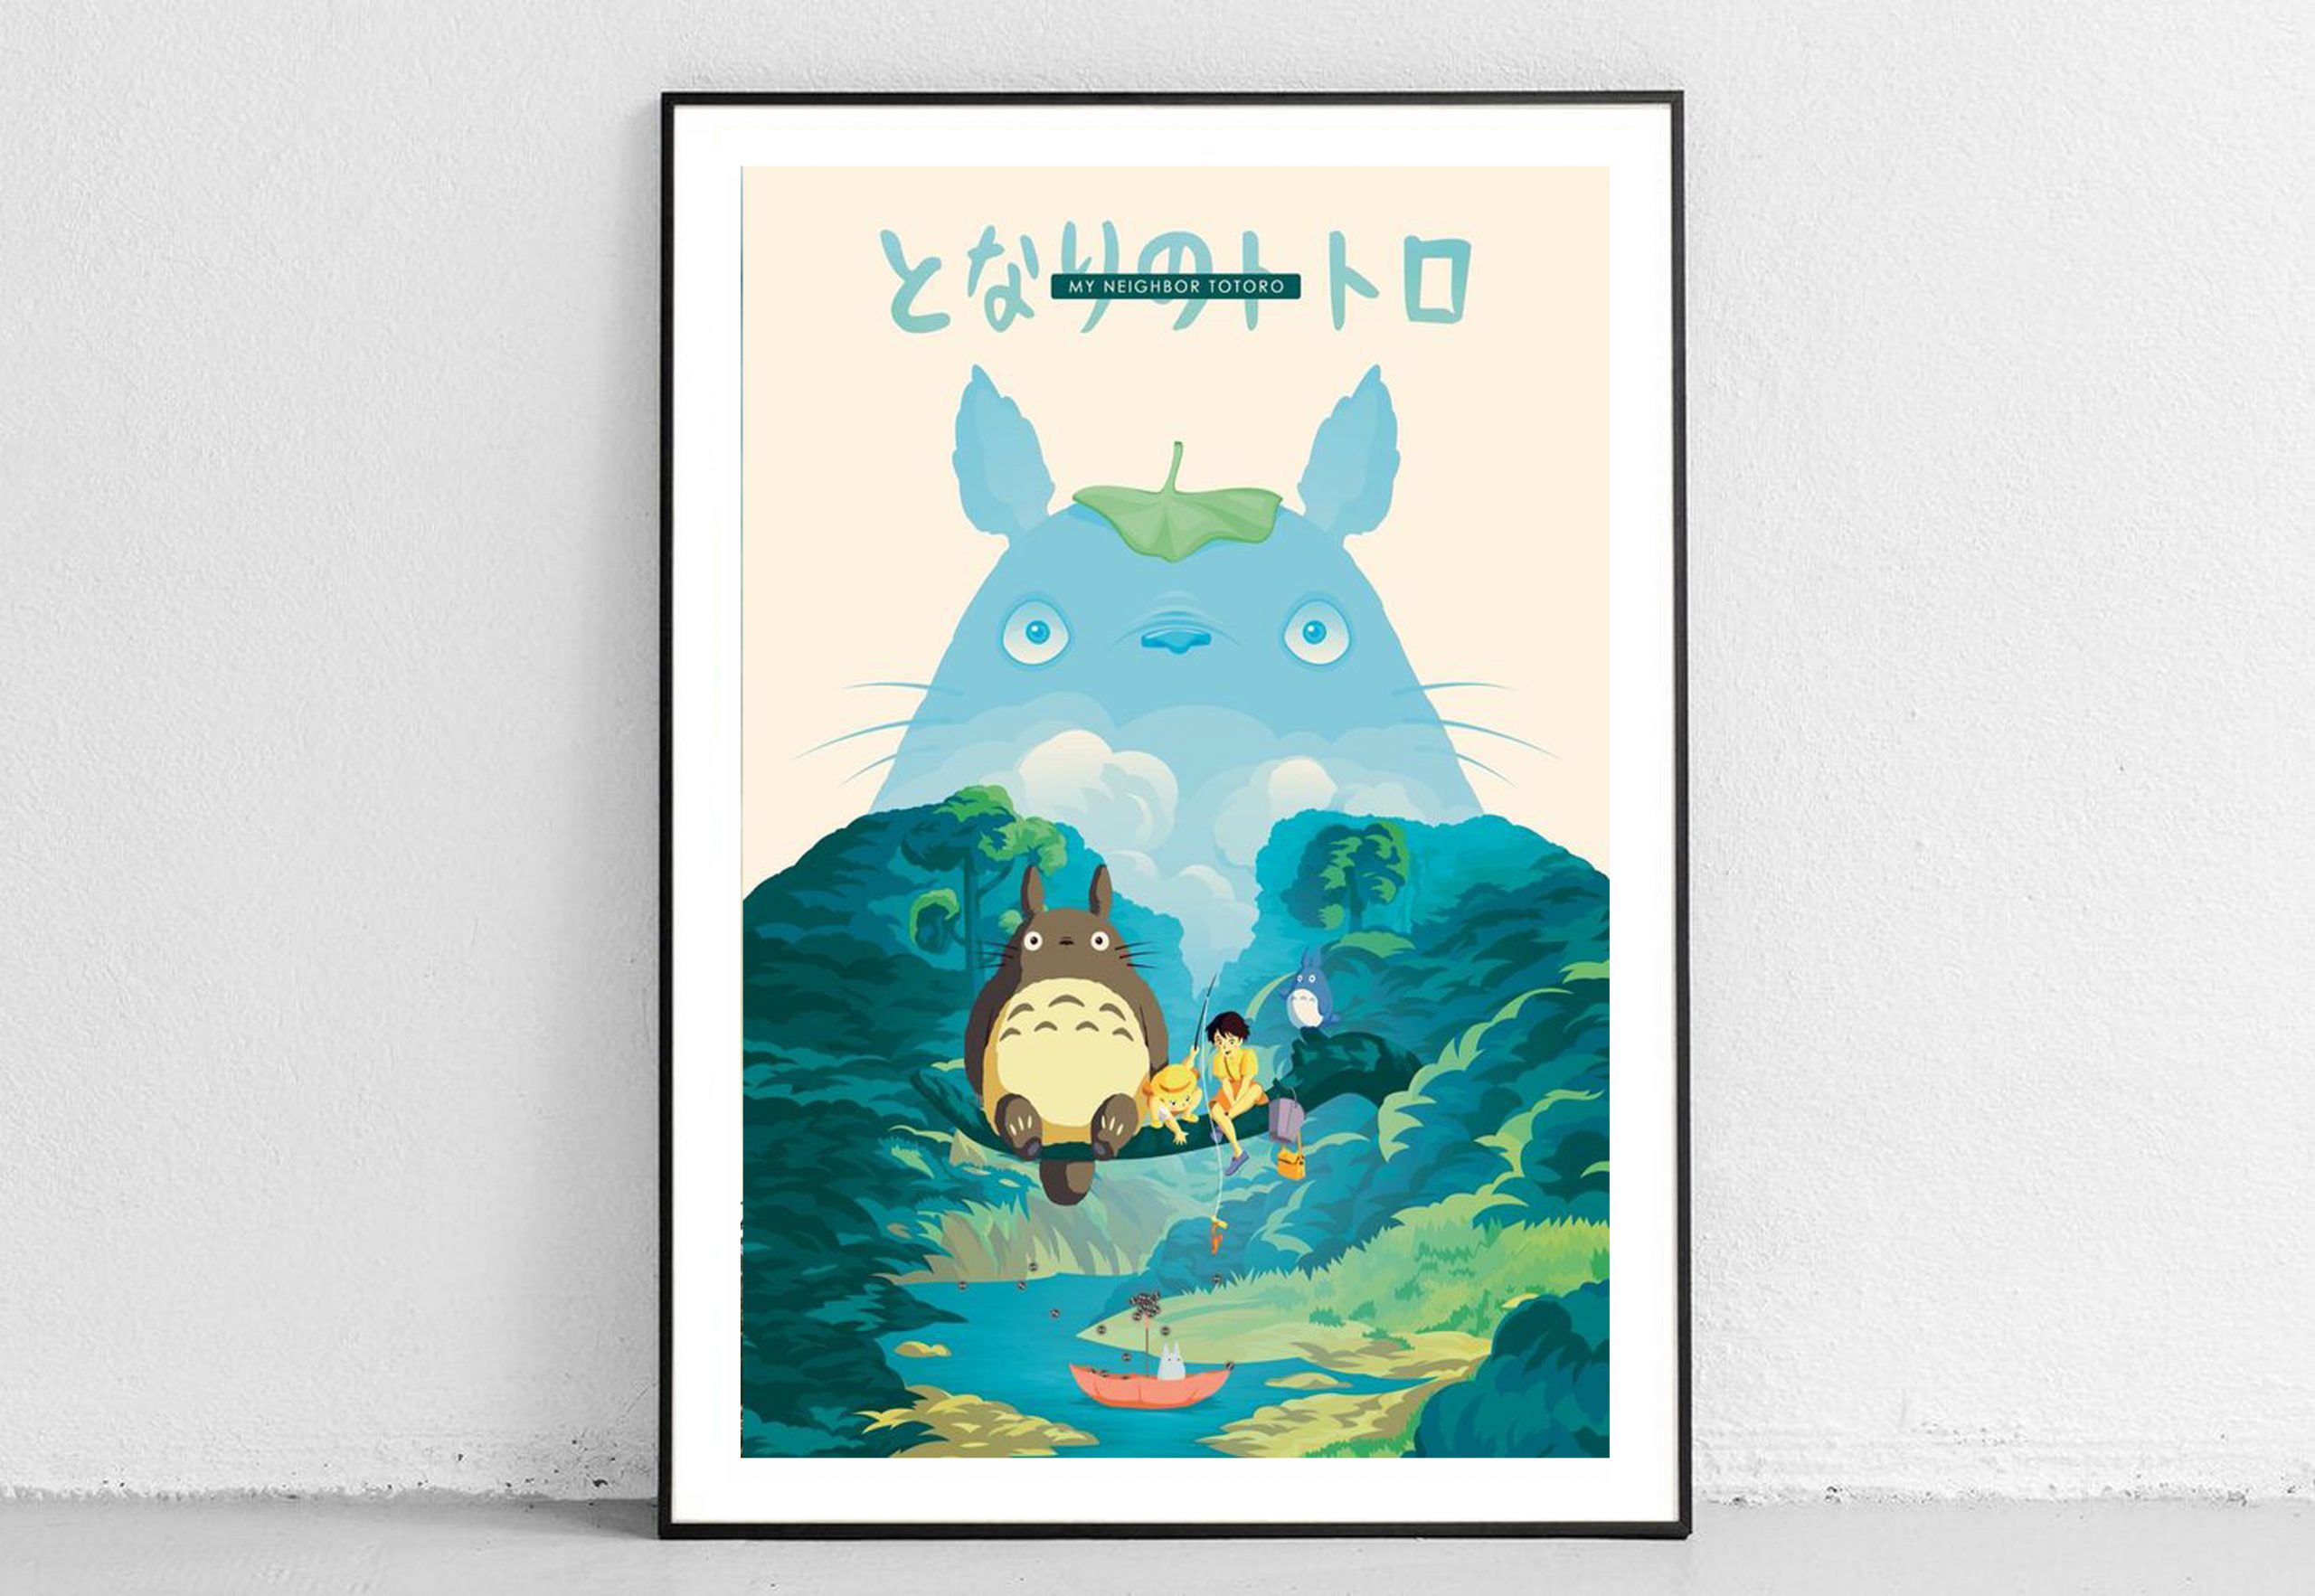  onthewall My Neighbour Totoro Studio Ghibli Poster Art Print,  White, 30 x 40 cm: Posters & Prints